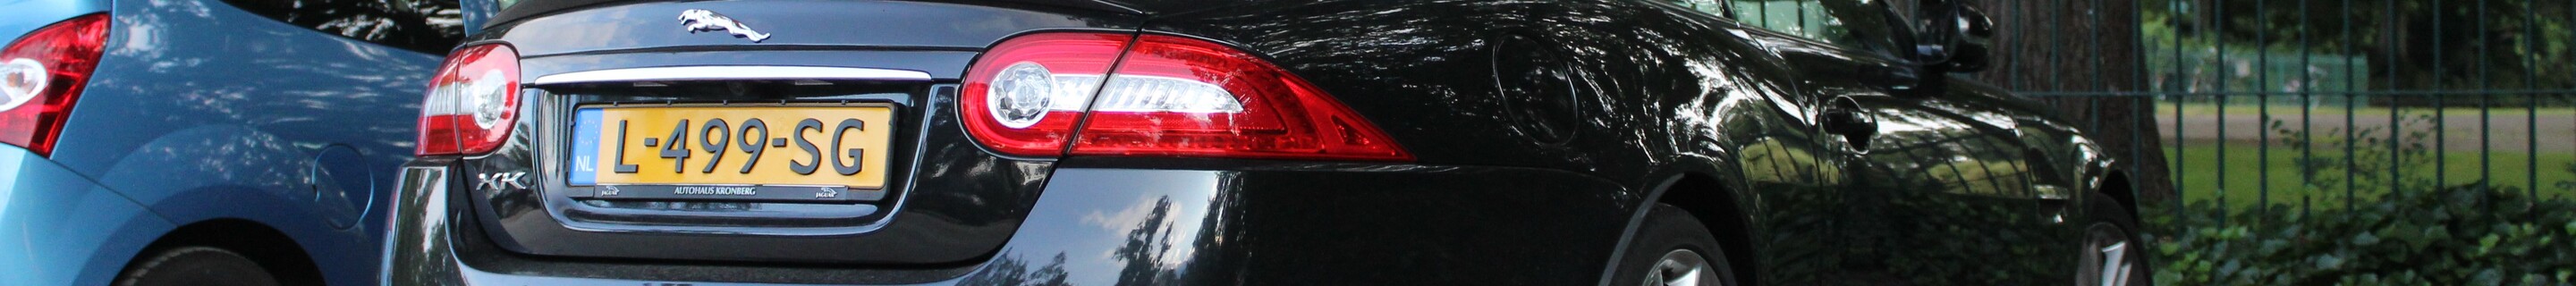 Jaguar XKR Convertible 2012